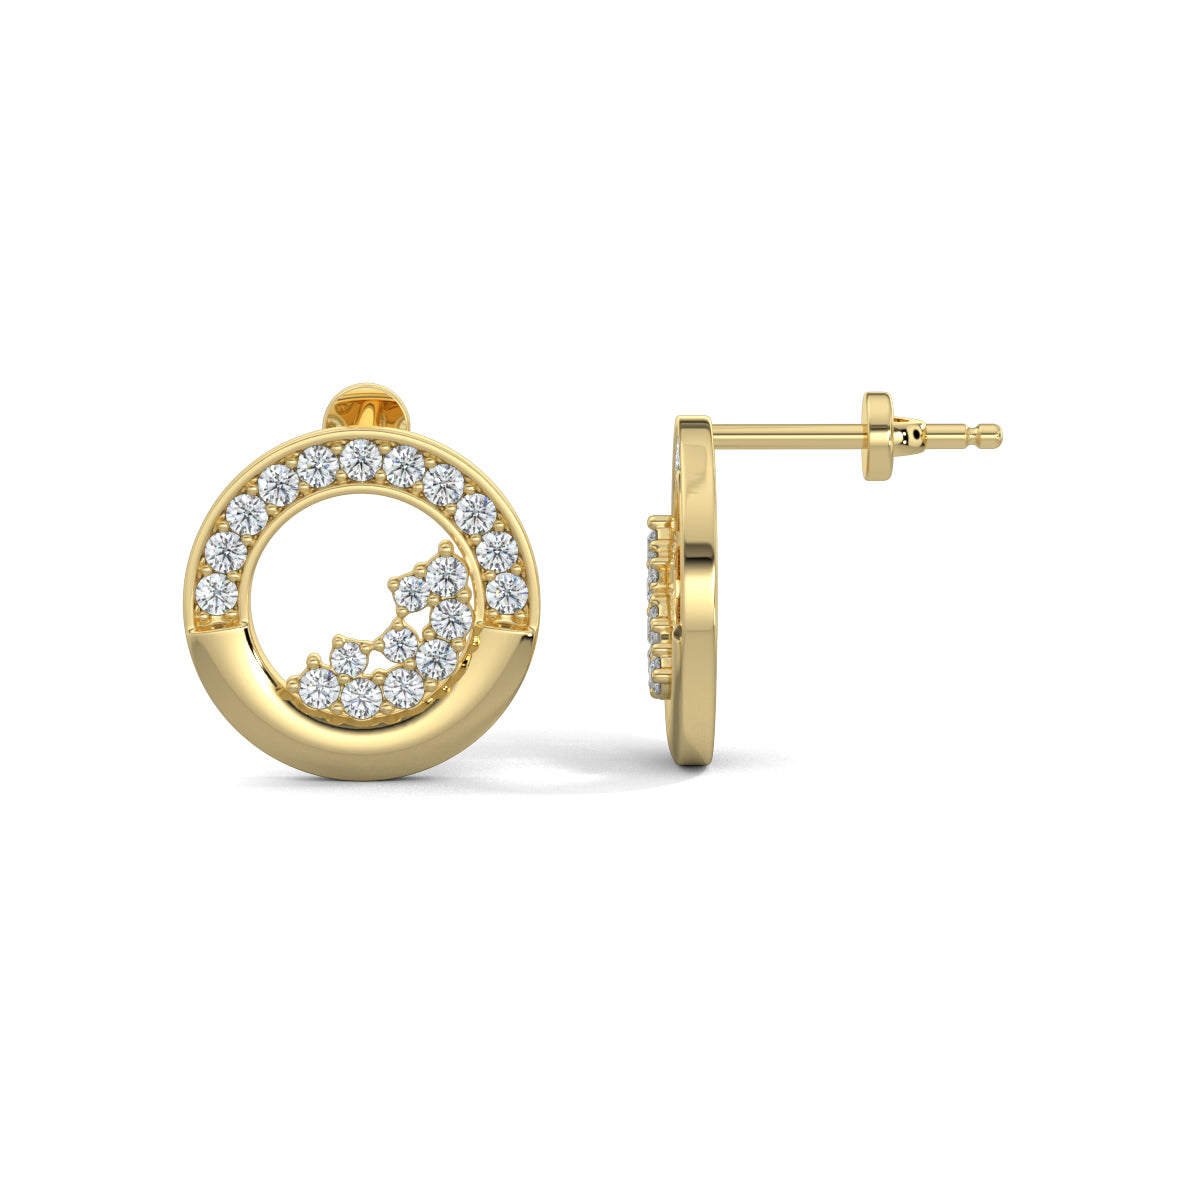 Yellow Gold, Diamond Earrings, Natural diamond earrings, Lab-grown diamond earrings, stud earrings, circle shape earrings, diamond cluster studs, elegant earrings, sparkling jewelry